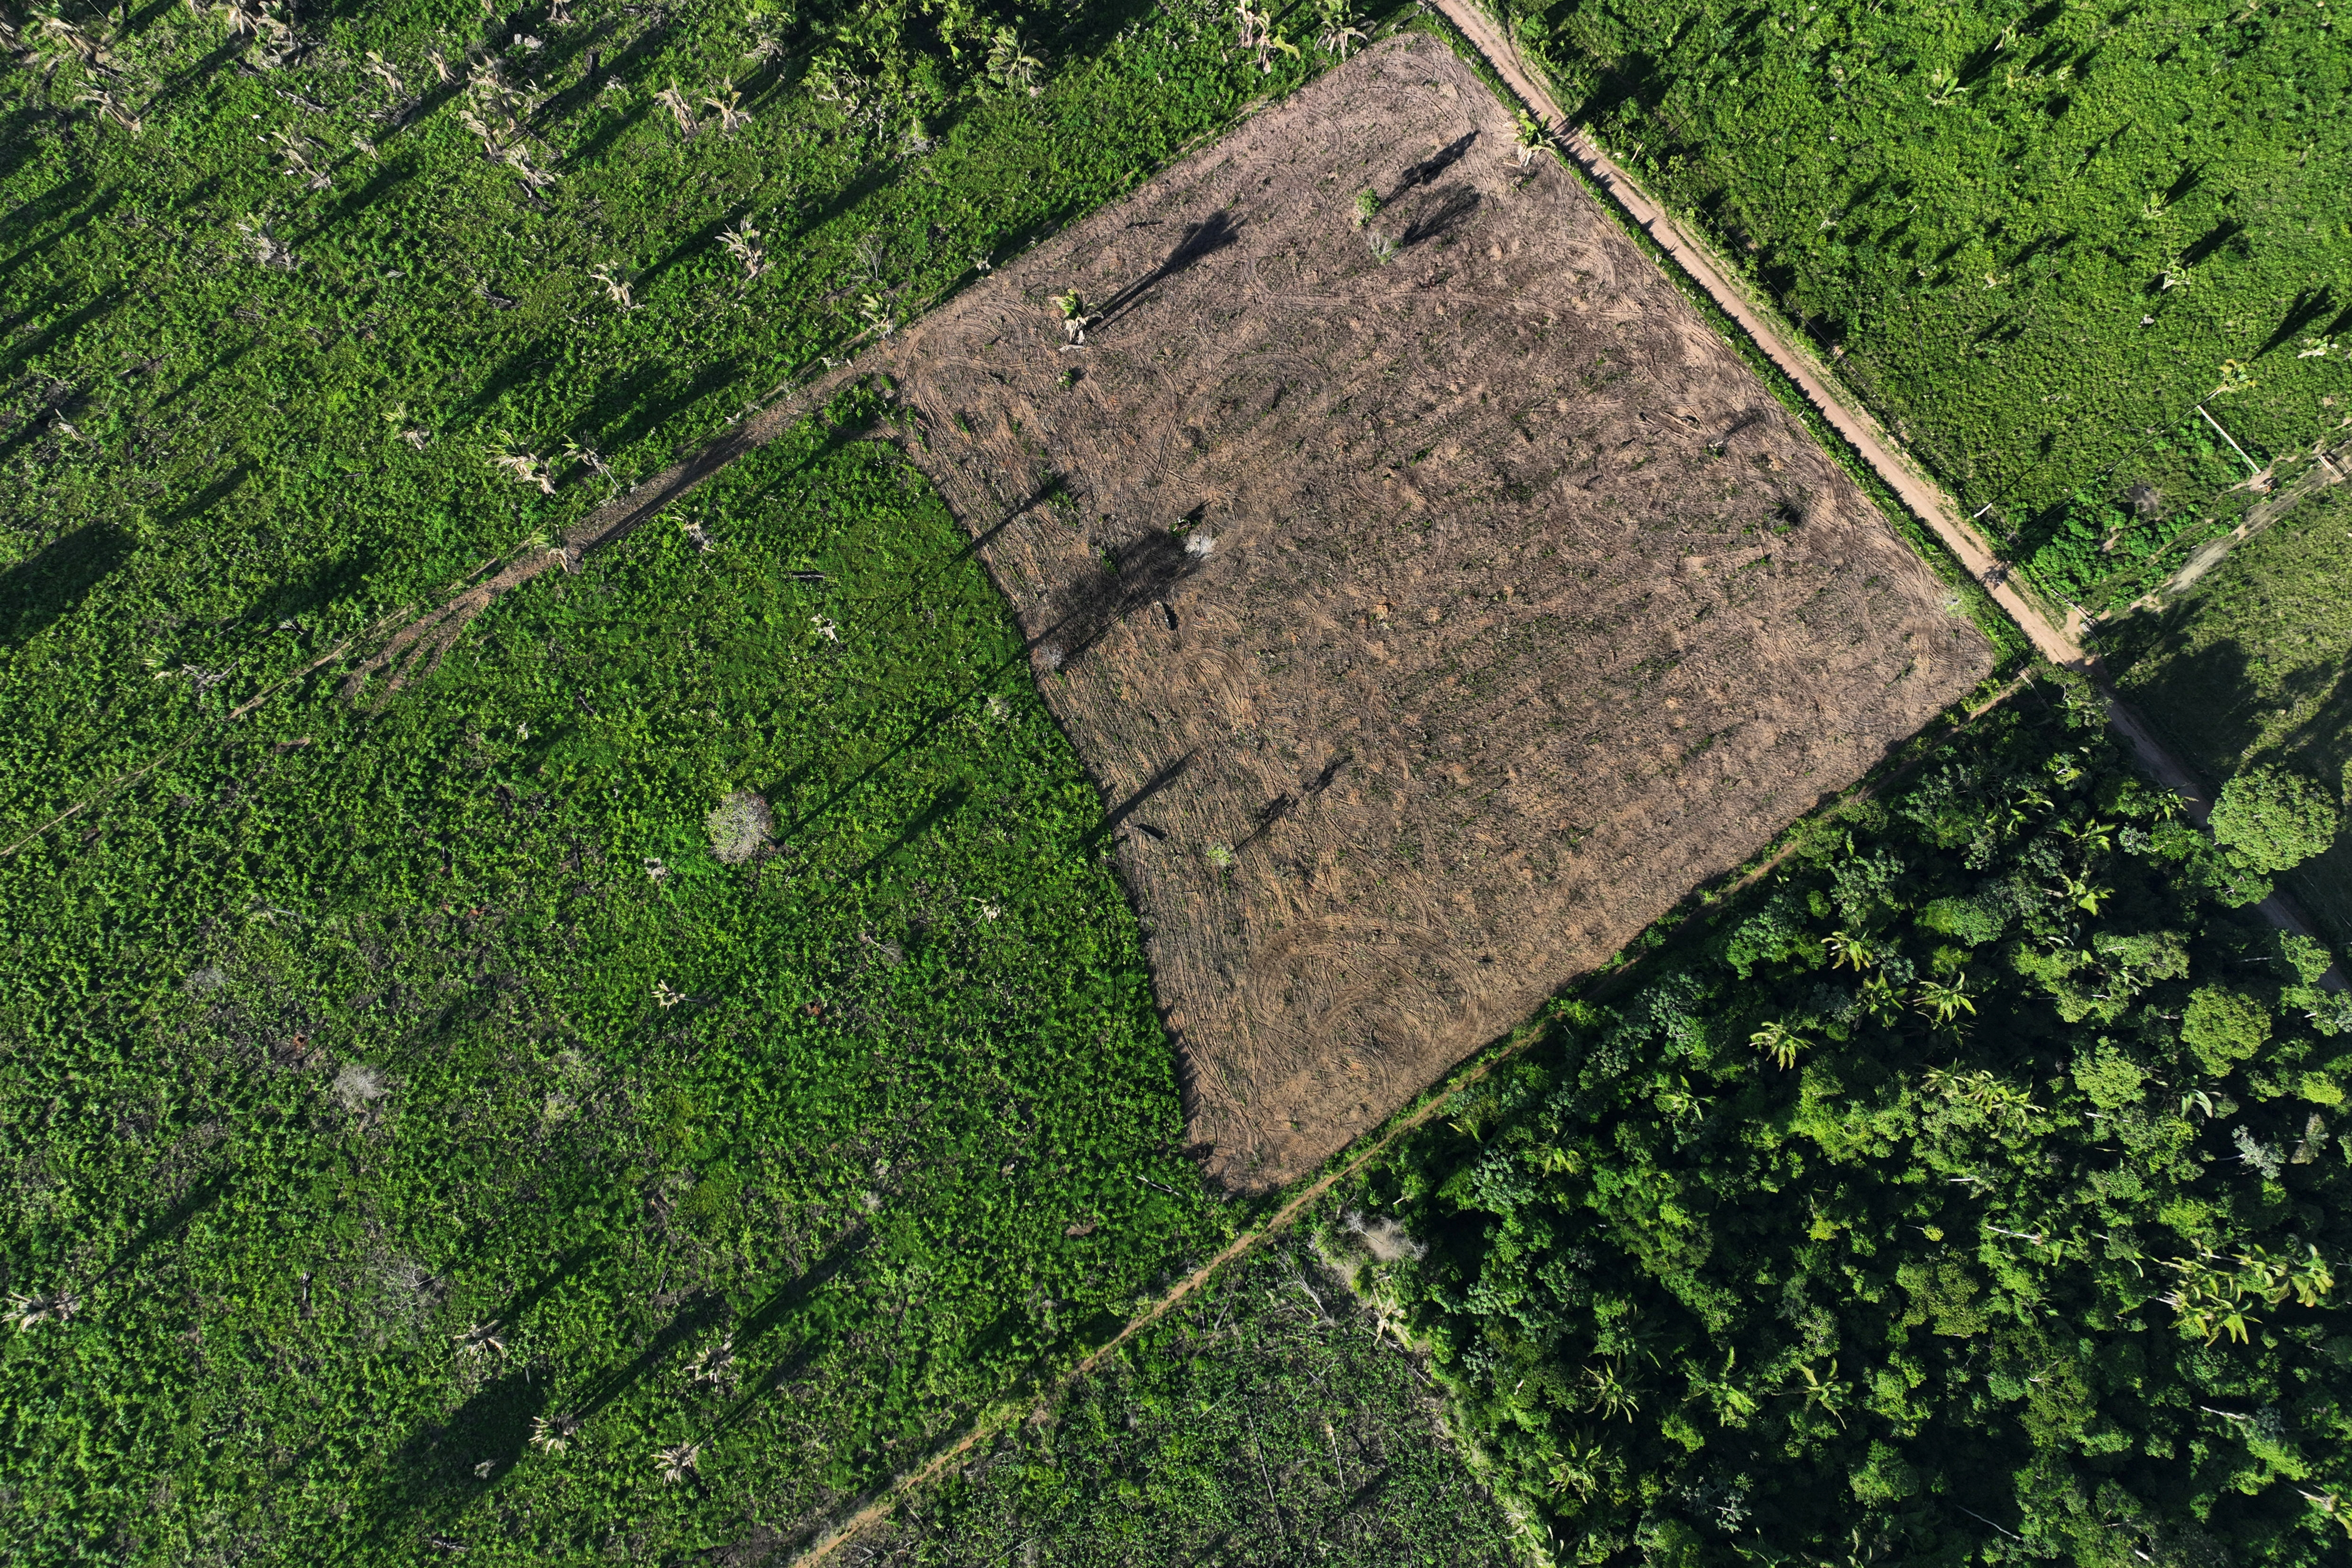 Lula's Amazon pledge looks distant as Brazil battles deforestation